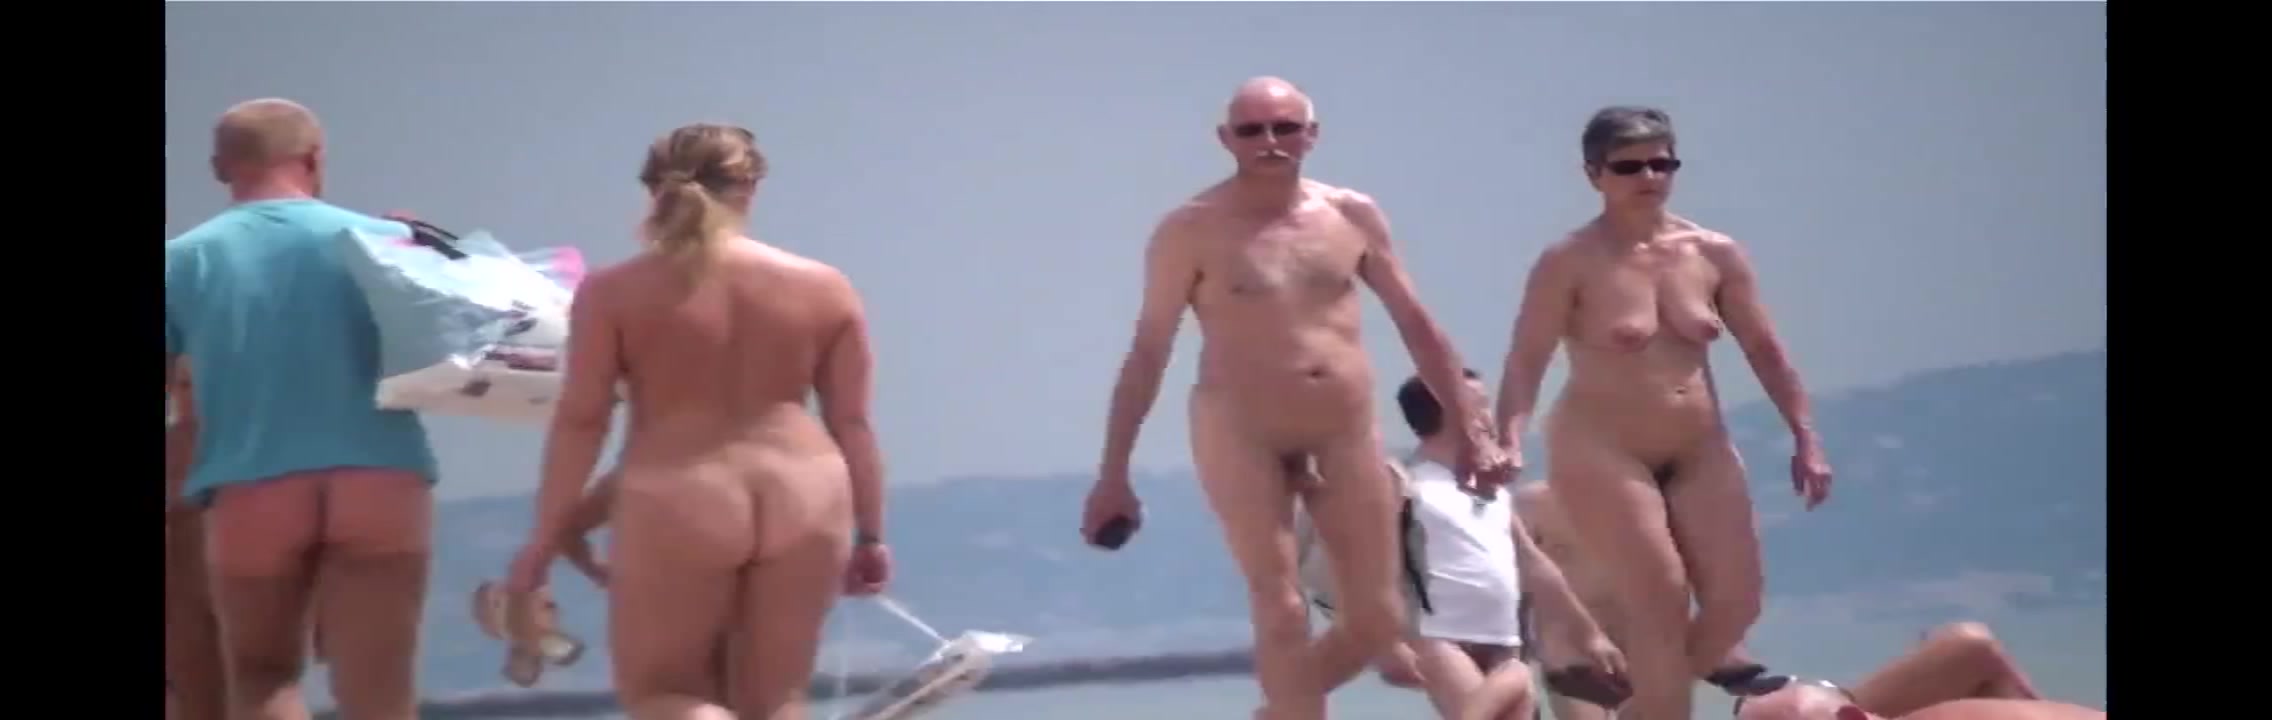 French nudist beach Cap d'Agde people walking nude 03